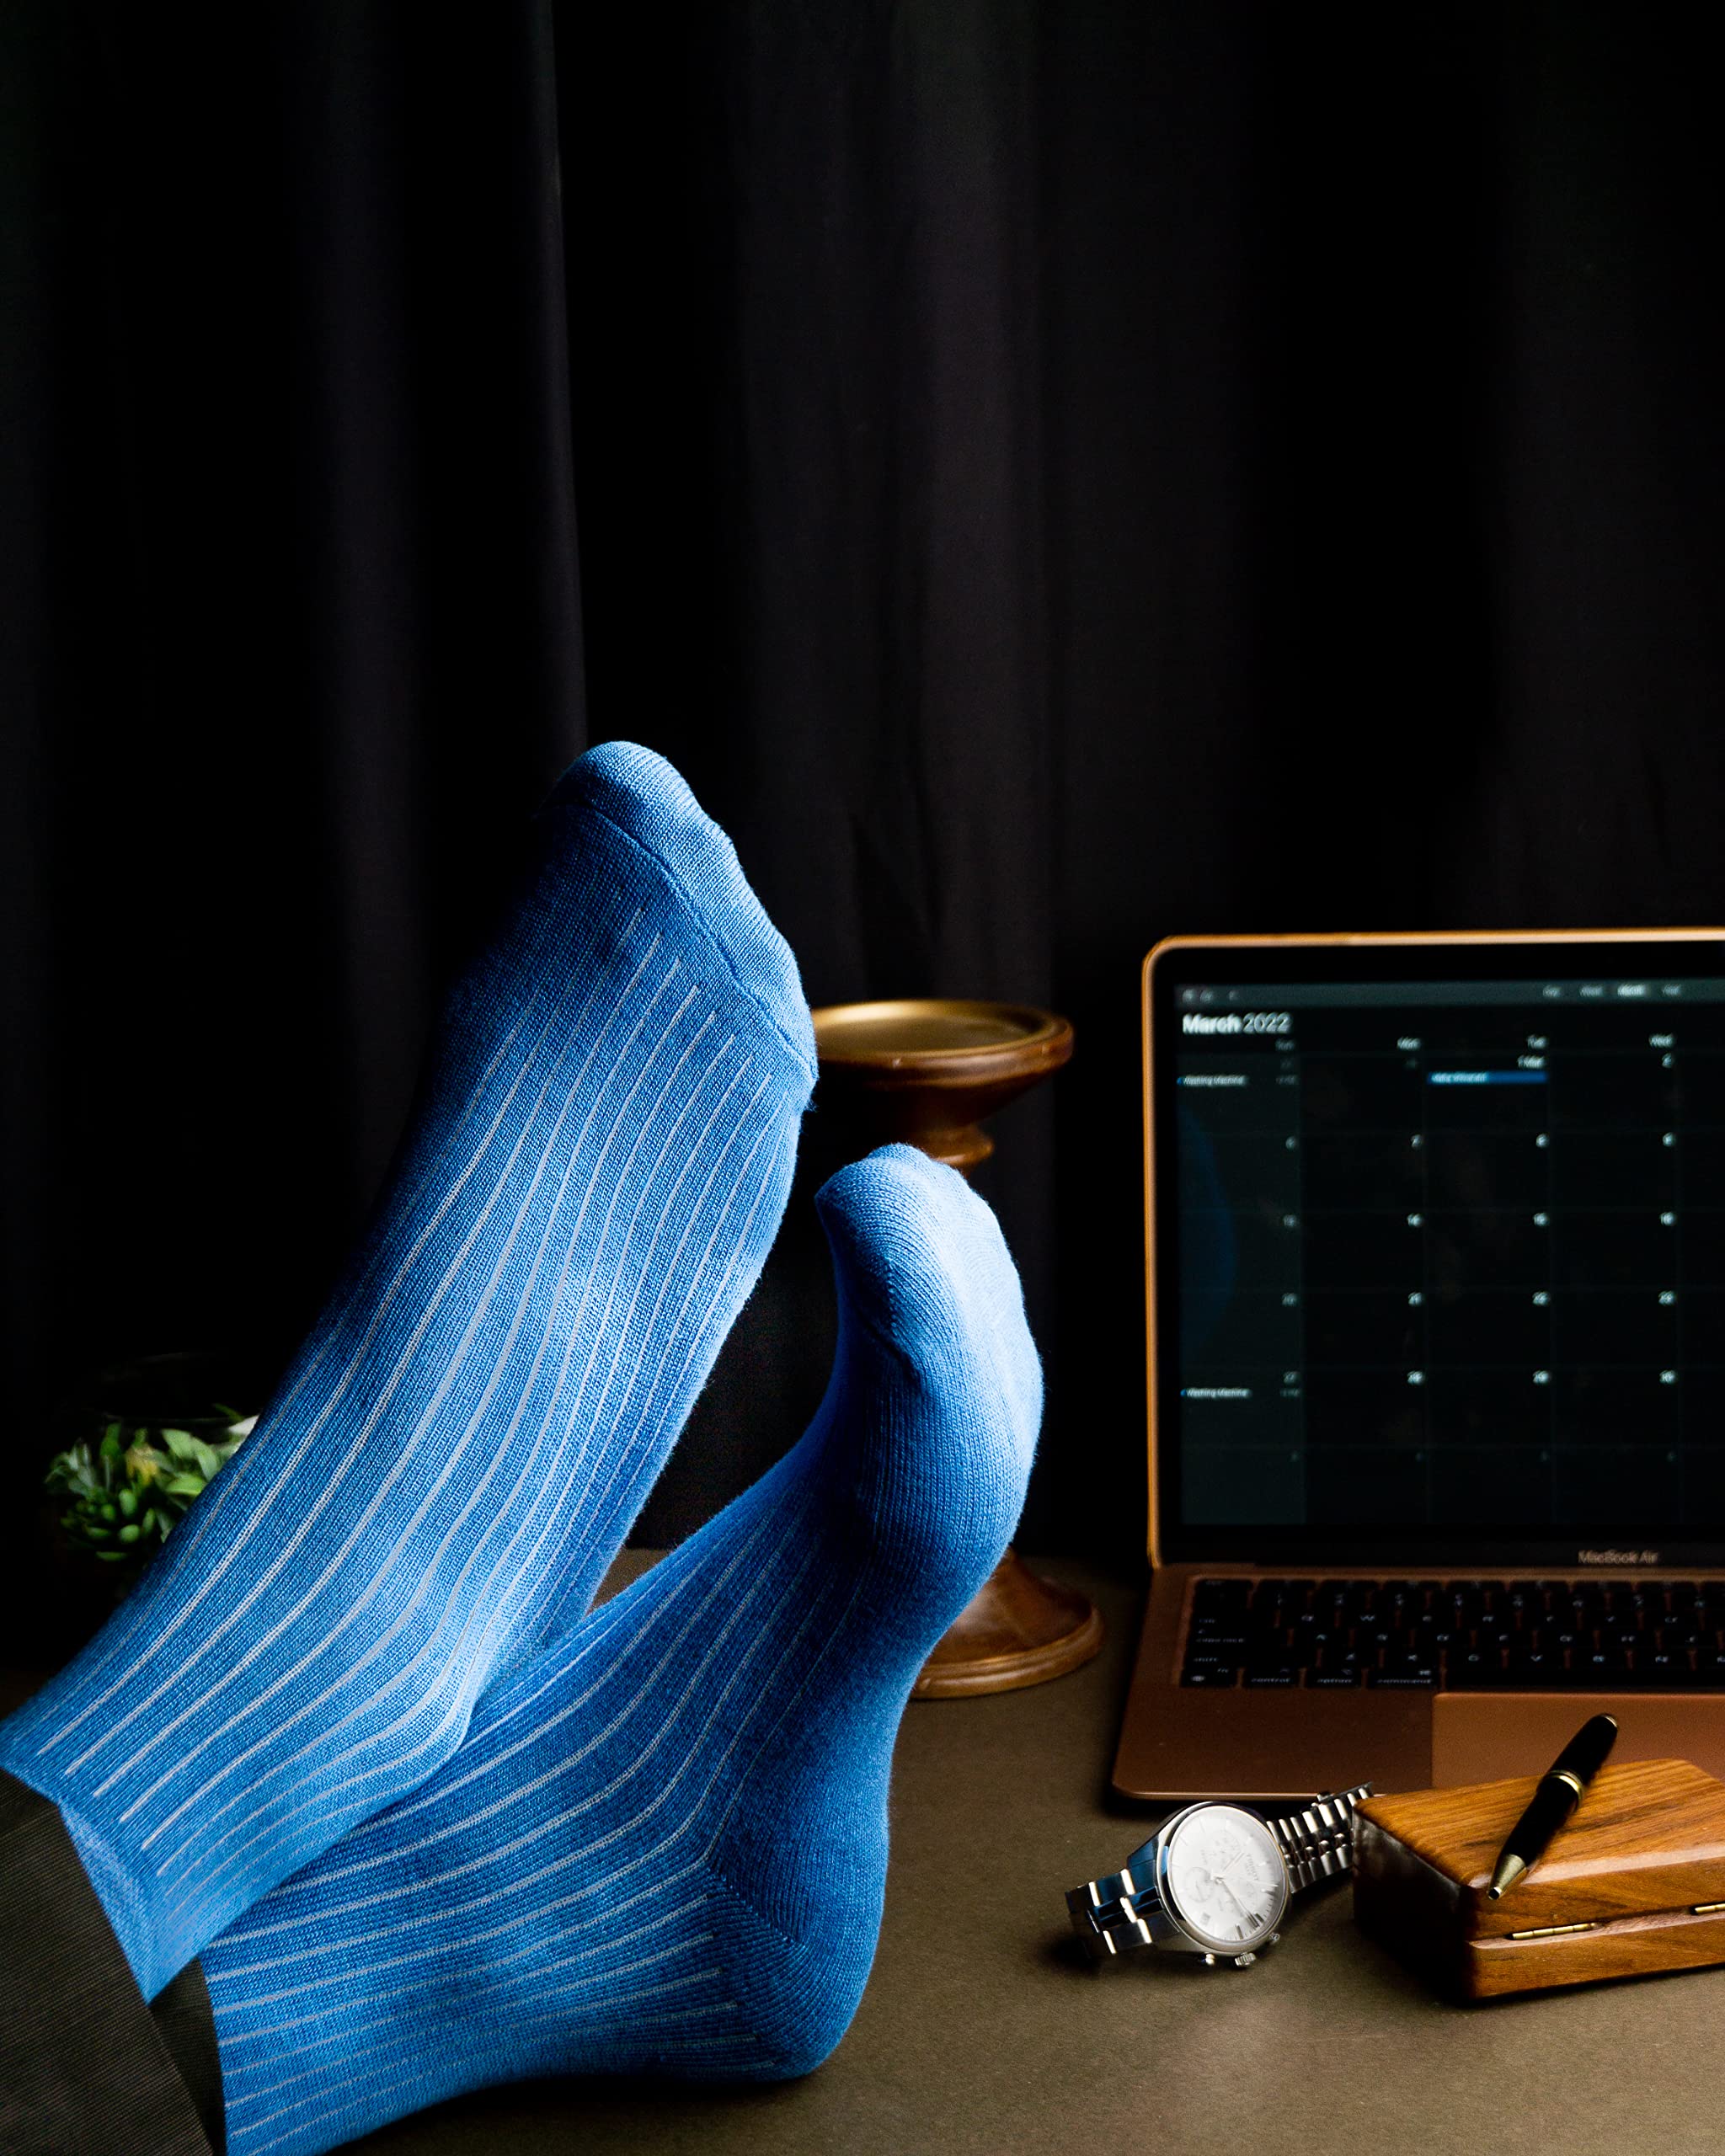 Mush Bamboo Performance Socks for Men || Sports & Casual Wear Ultra Soft, Anti Odor, Breathable Ankle Length Pack of 3 UK Size 6-10 (Sky Blue, White, Black & Sky Blue, Light Grey, Navy Blue, 6)